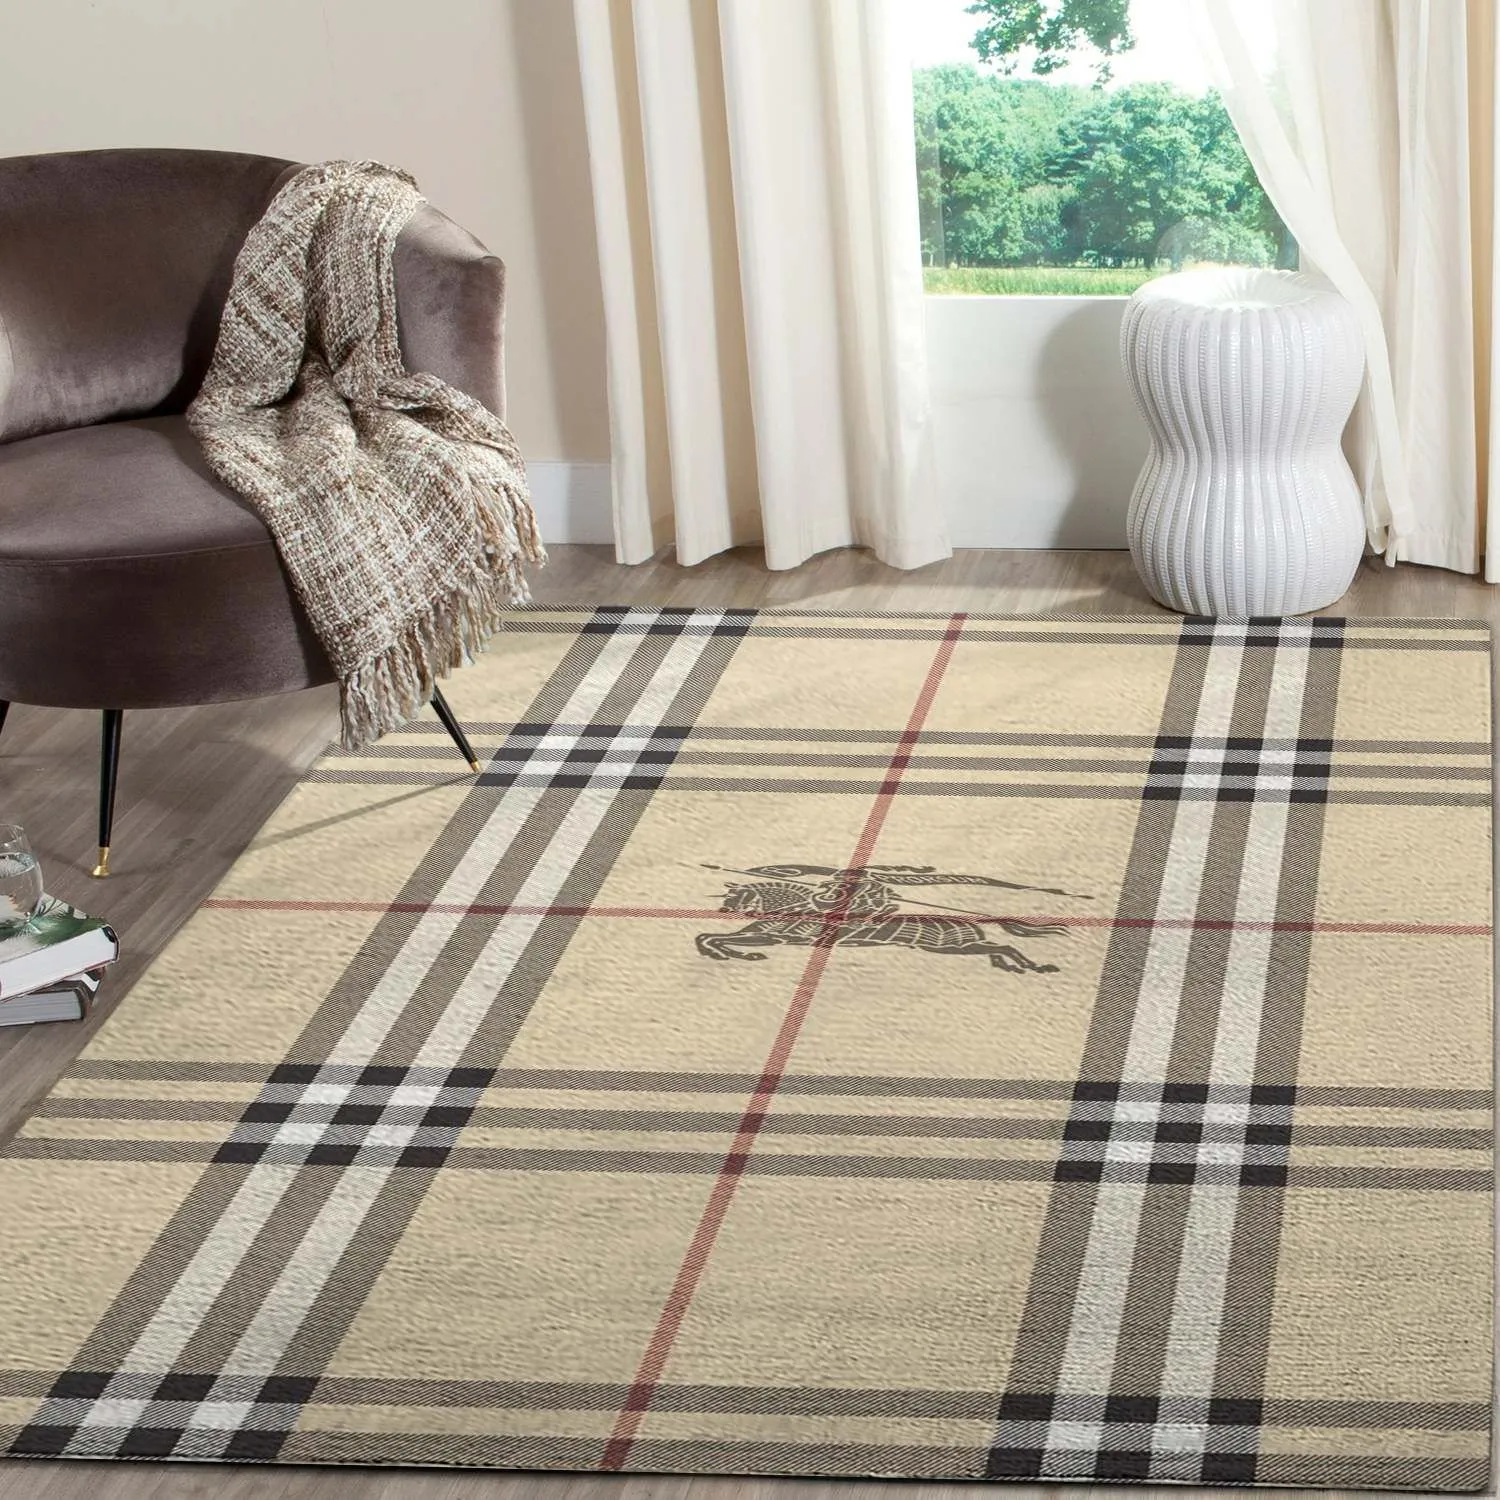 Burberry Rectangle Rug Home Decor Area Carpet Door Mat Fashion Brand Luxury